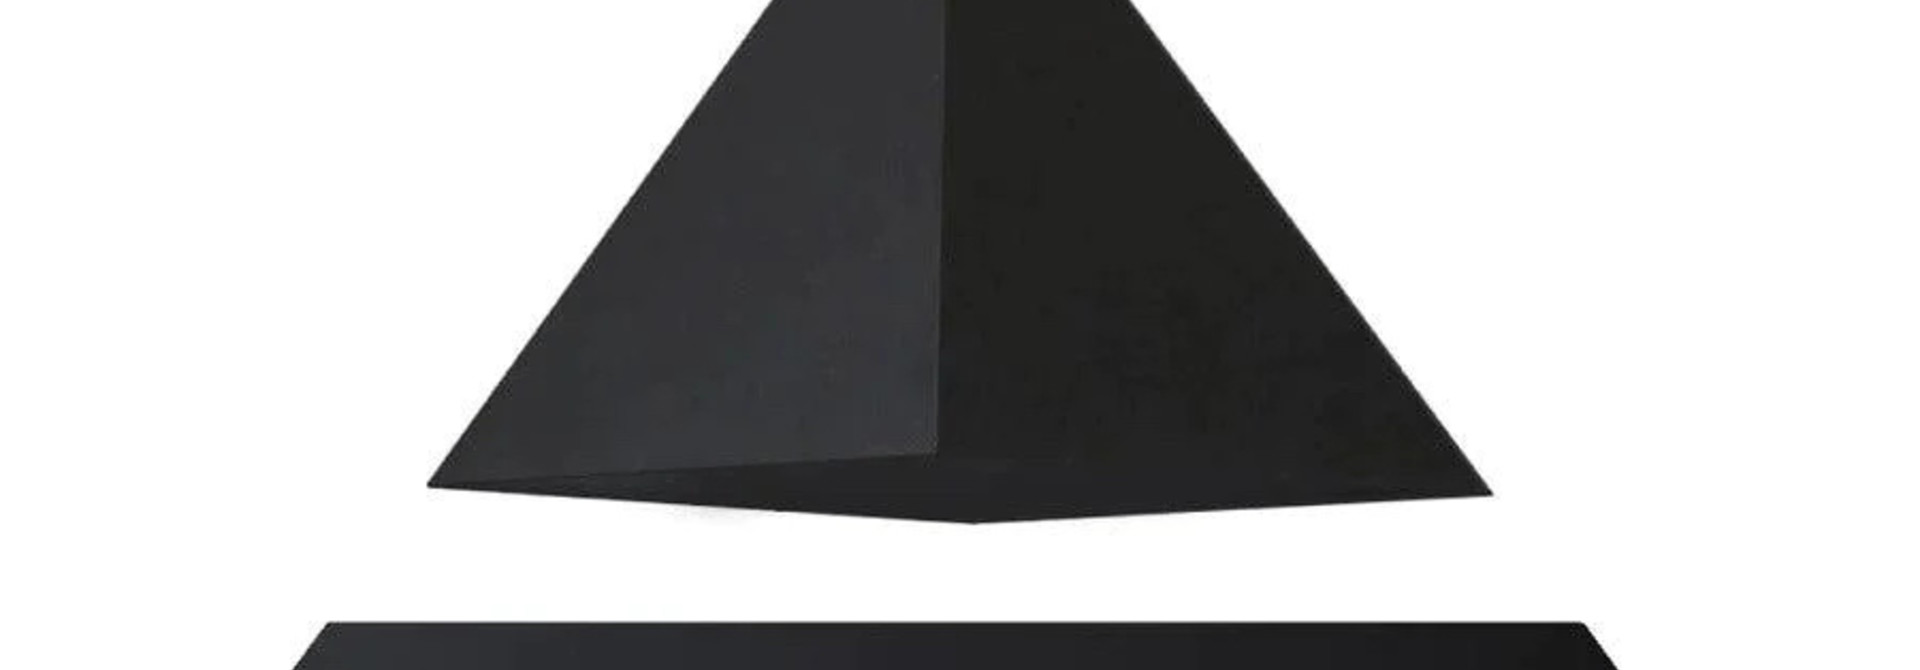 Pyramide en Levitation Py Noir